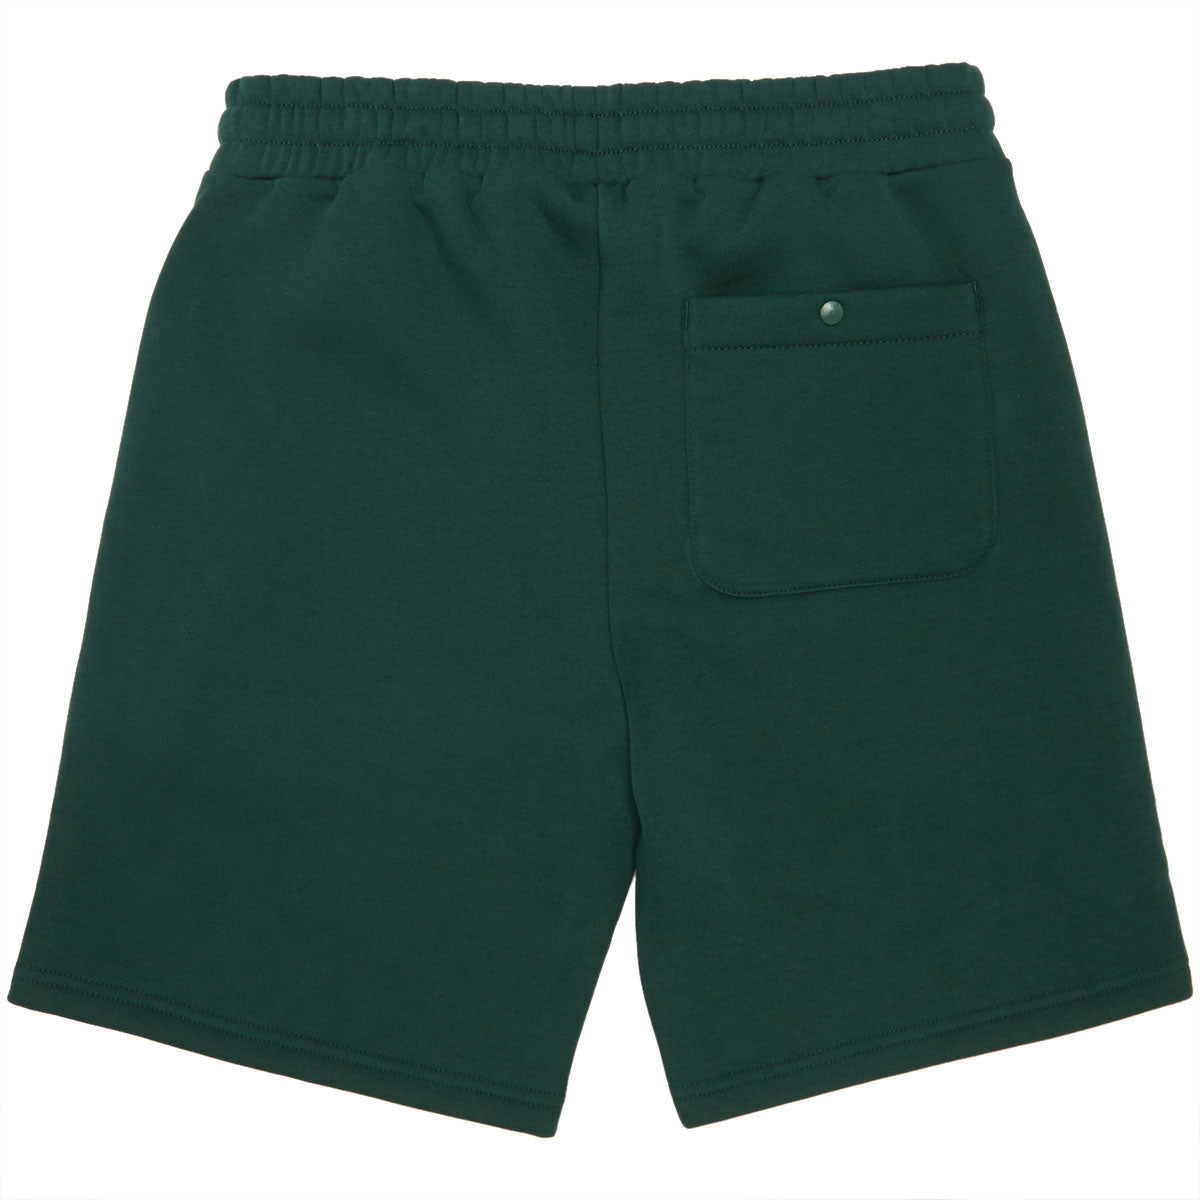 DGK Wonderland Fleece Shorts - Green image 2